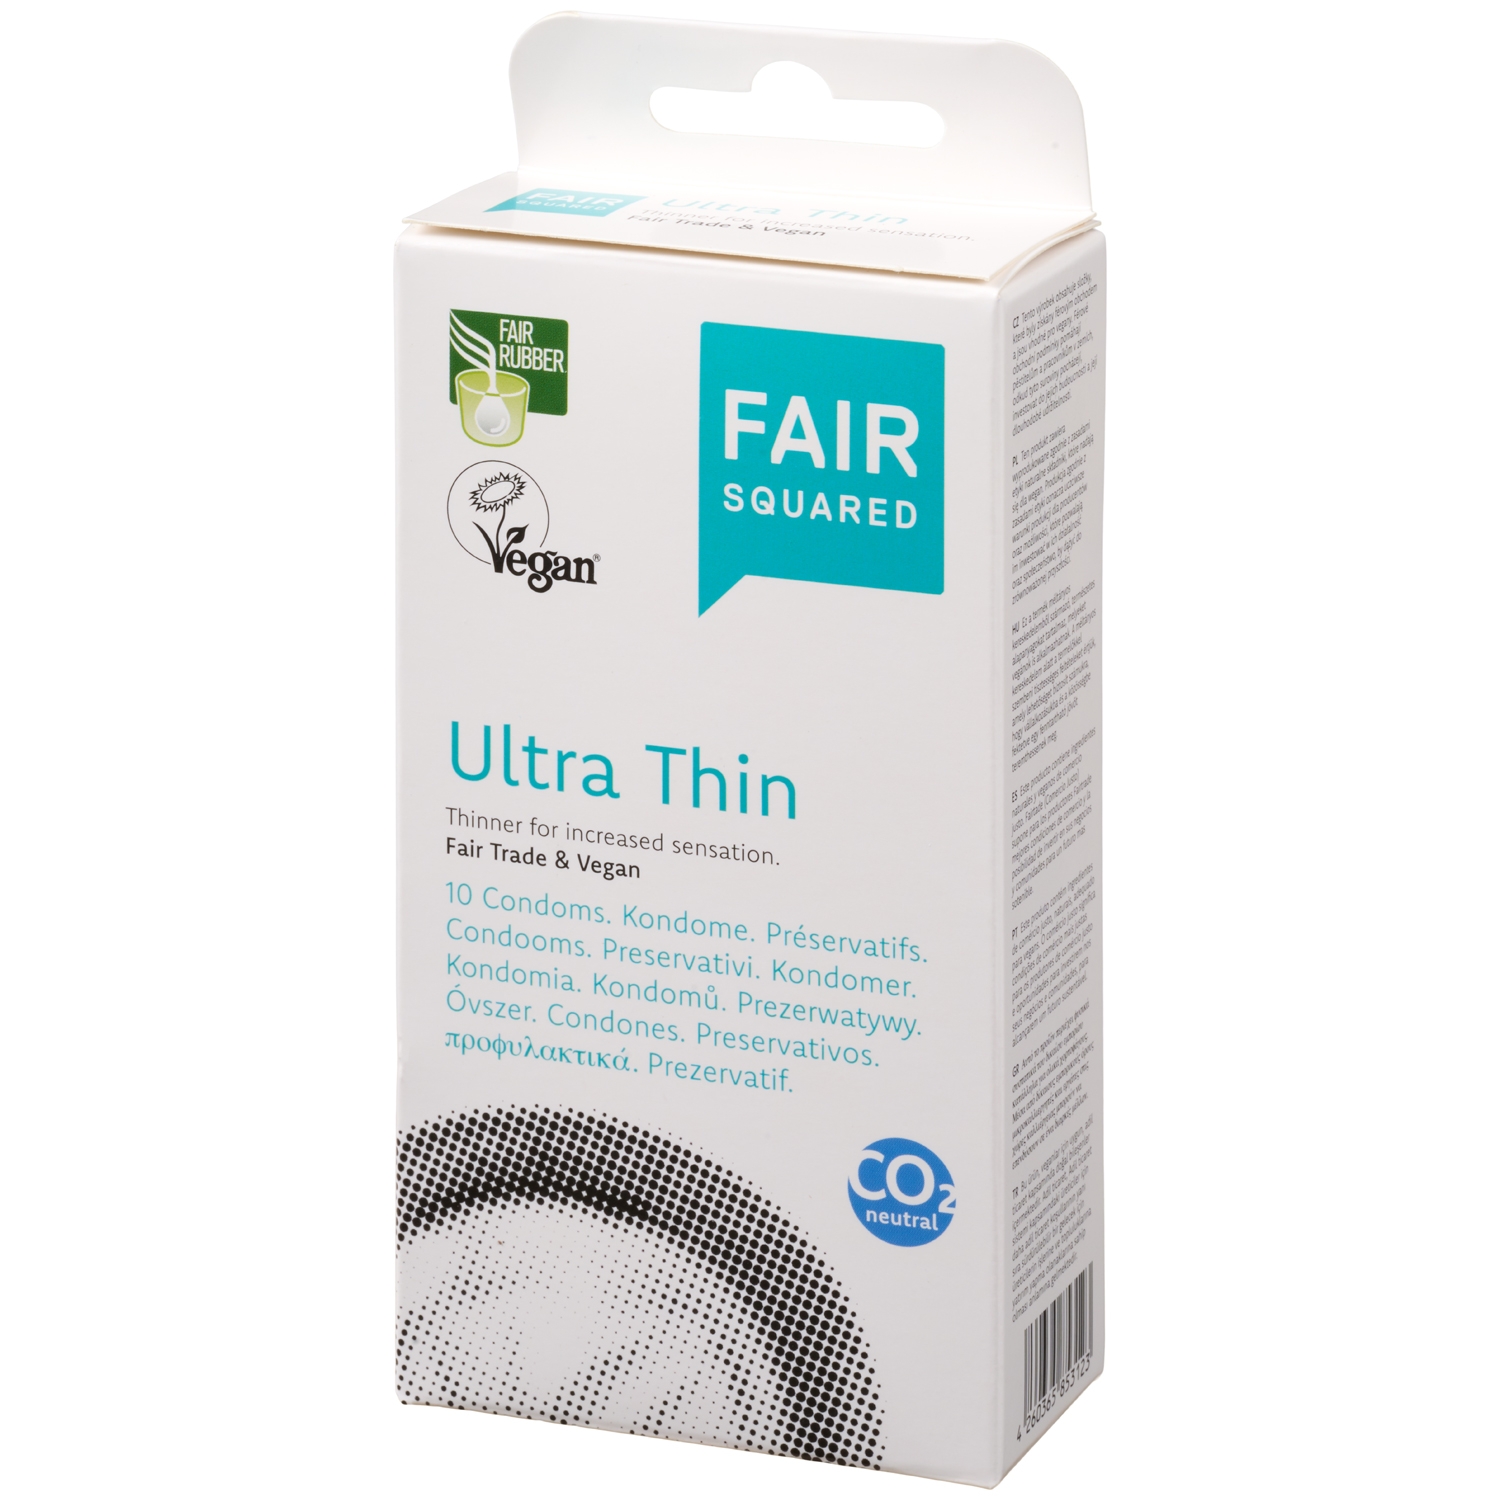 Fair Squared Ultra Thin Vegan Kondomer 10 stk - Klar